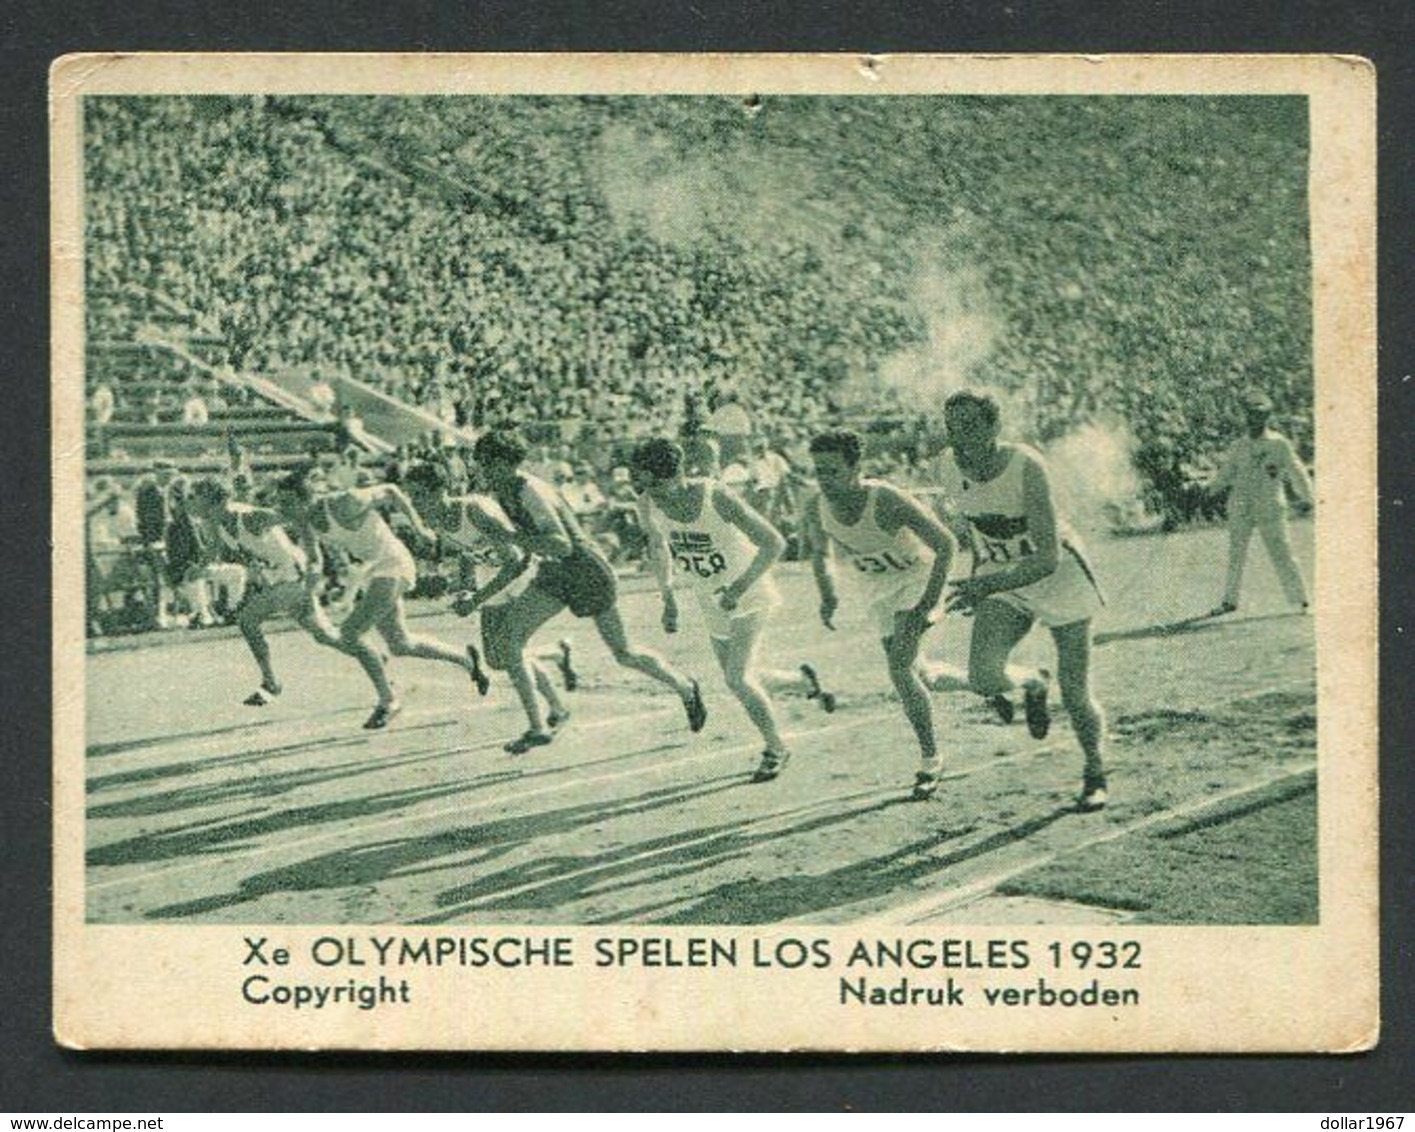 27 stuks : Olympisch spelen LA - Los Angeles 1932.-   used , 2 scans for condition. (Originalscan !! )